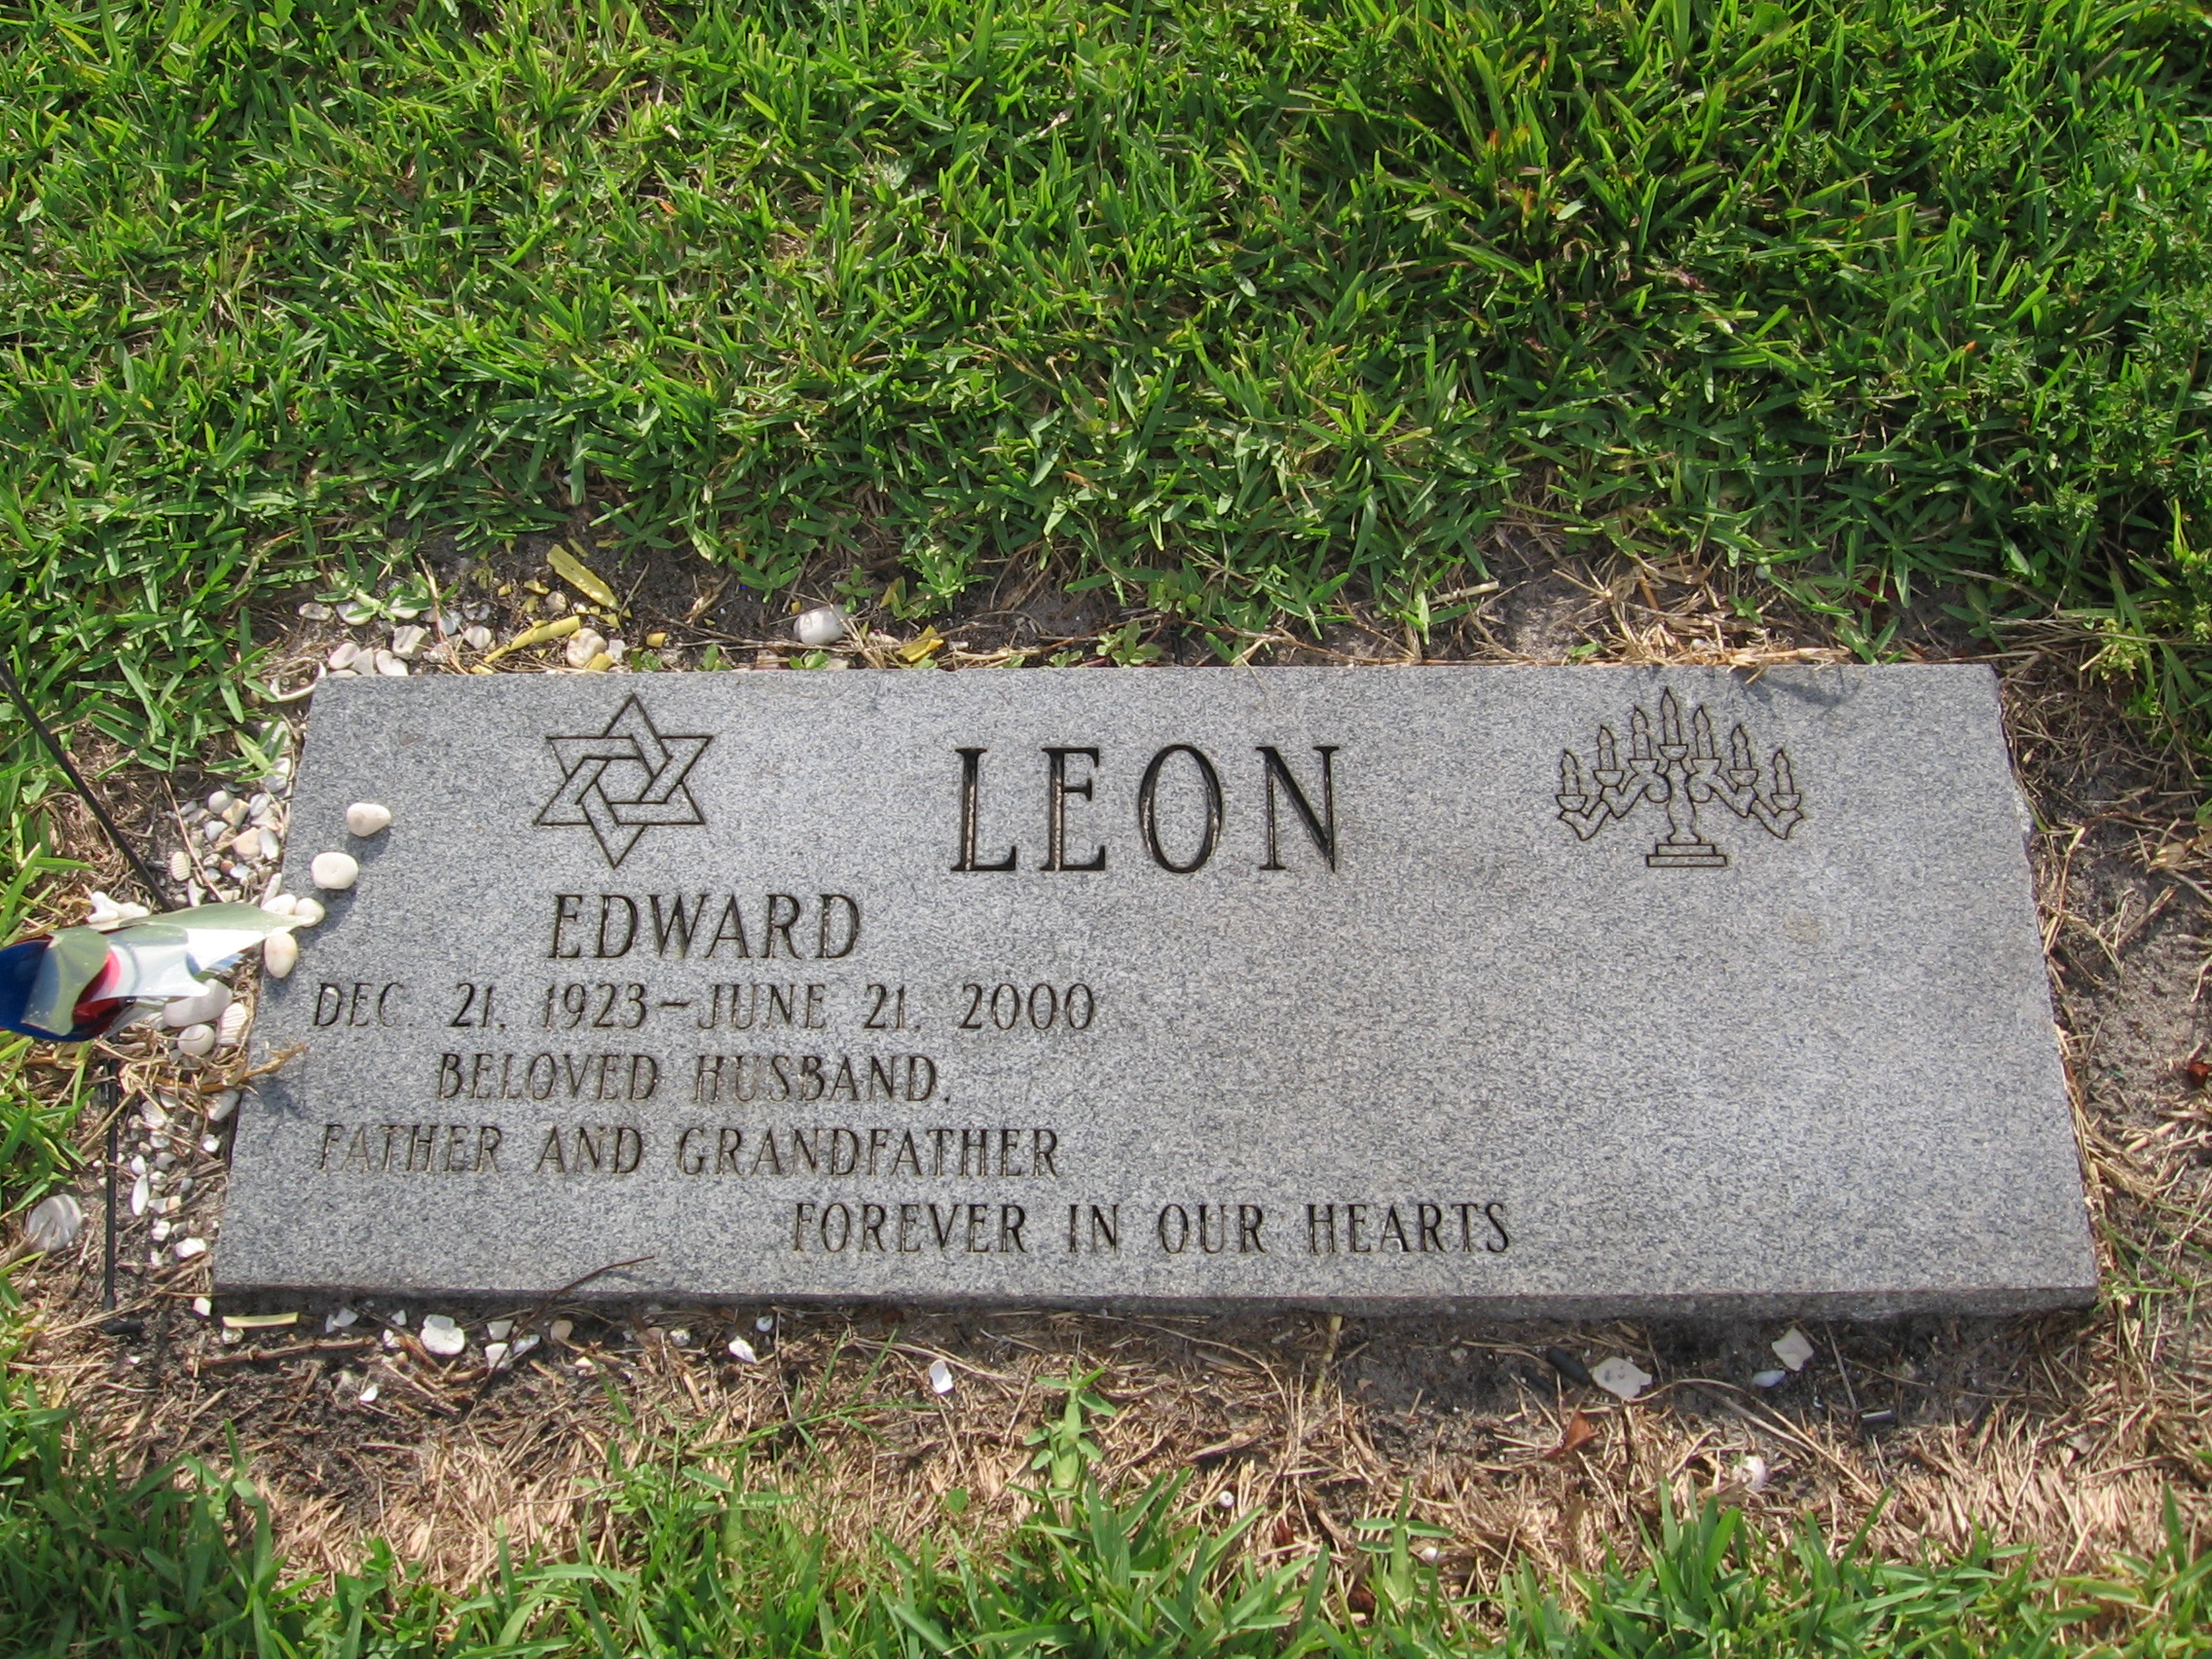 Edward Leon